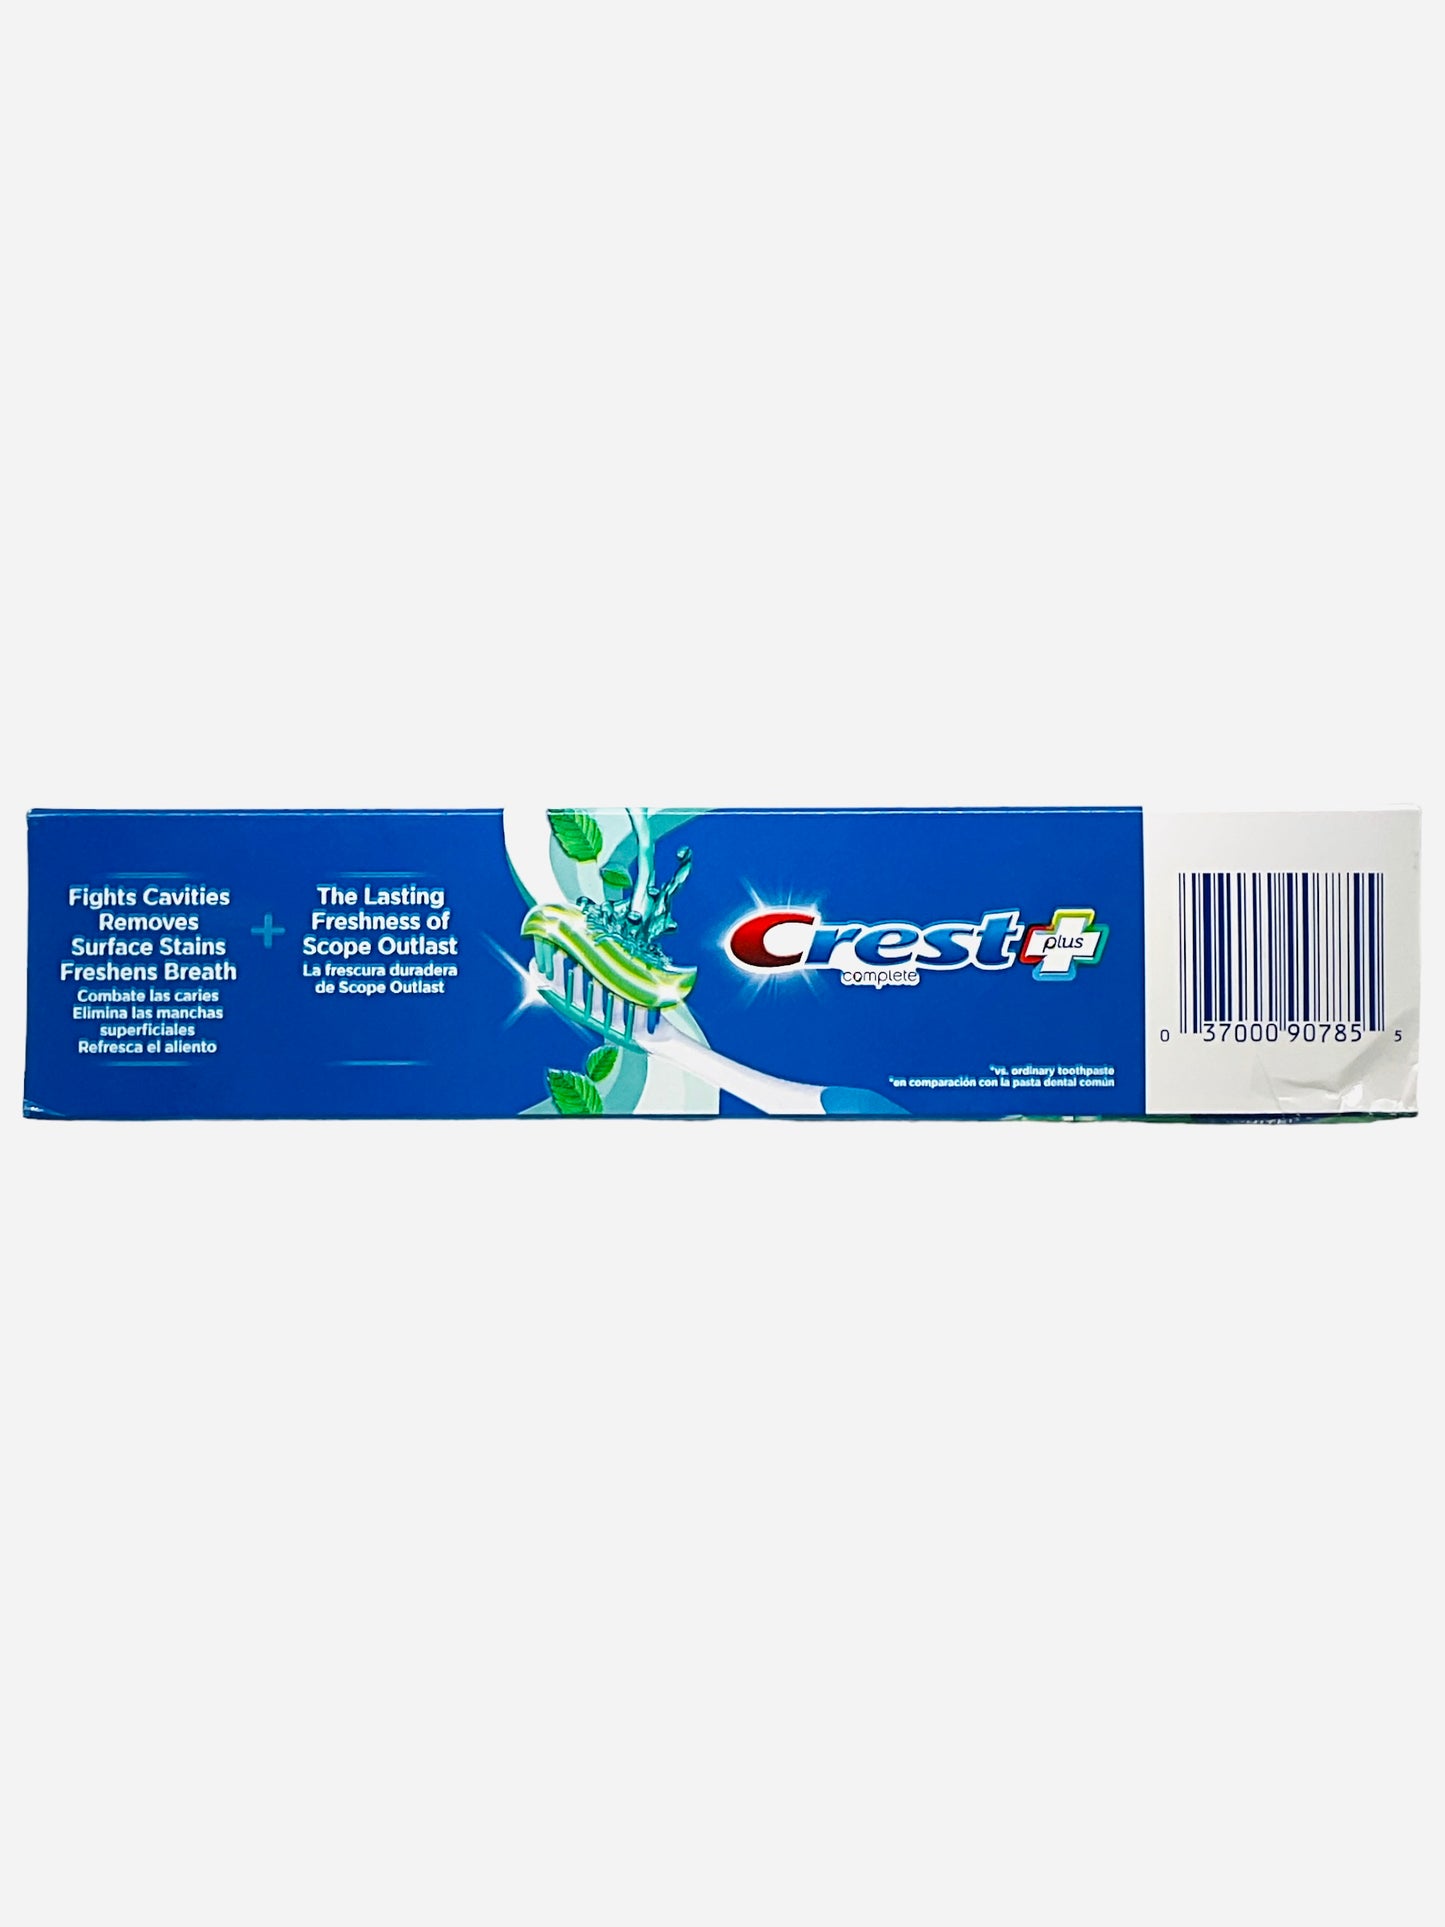 Crest Scope Whitening Toothpaste (5.4oz)